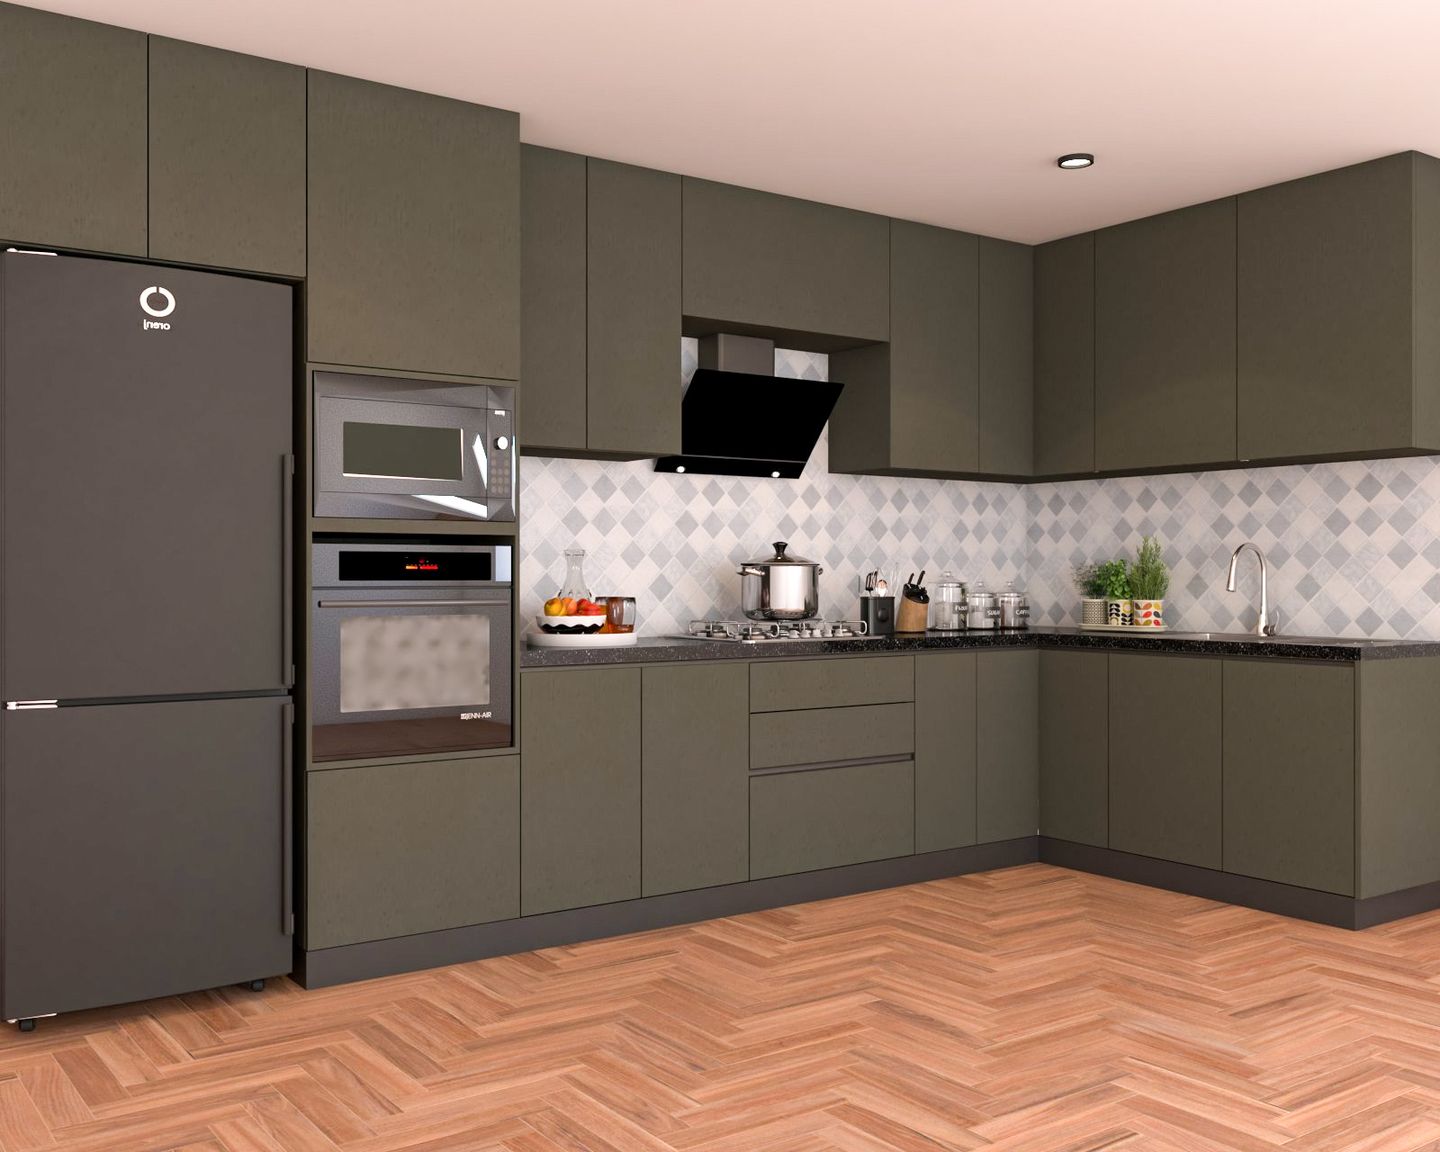 L-Shaped Contemporary Dark Green Kitchen Design With Tall Appliance Unit - Livspace Dark Green L-Shaped Kitchen Design With Dark Sintered Stone Countertop - Livspace